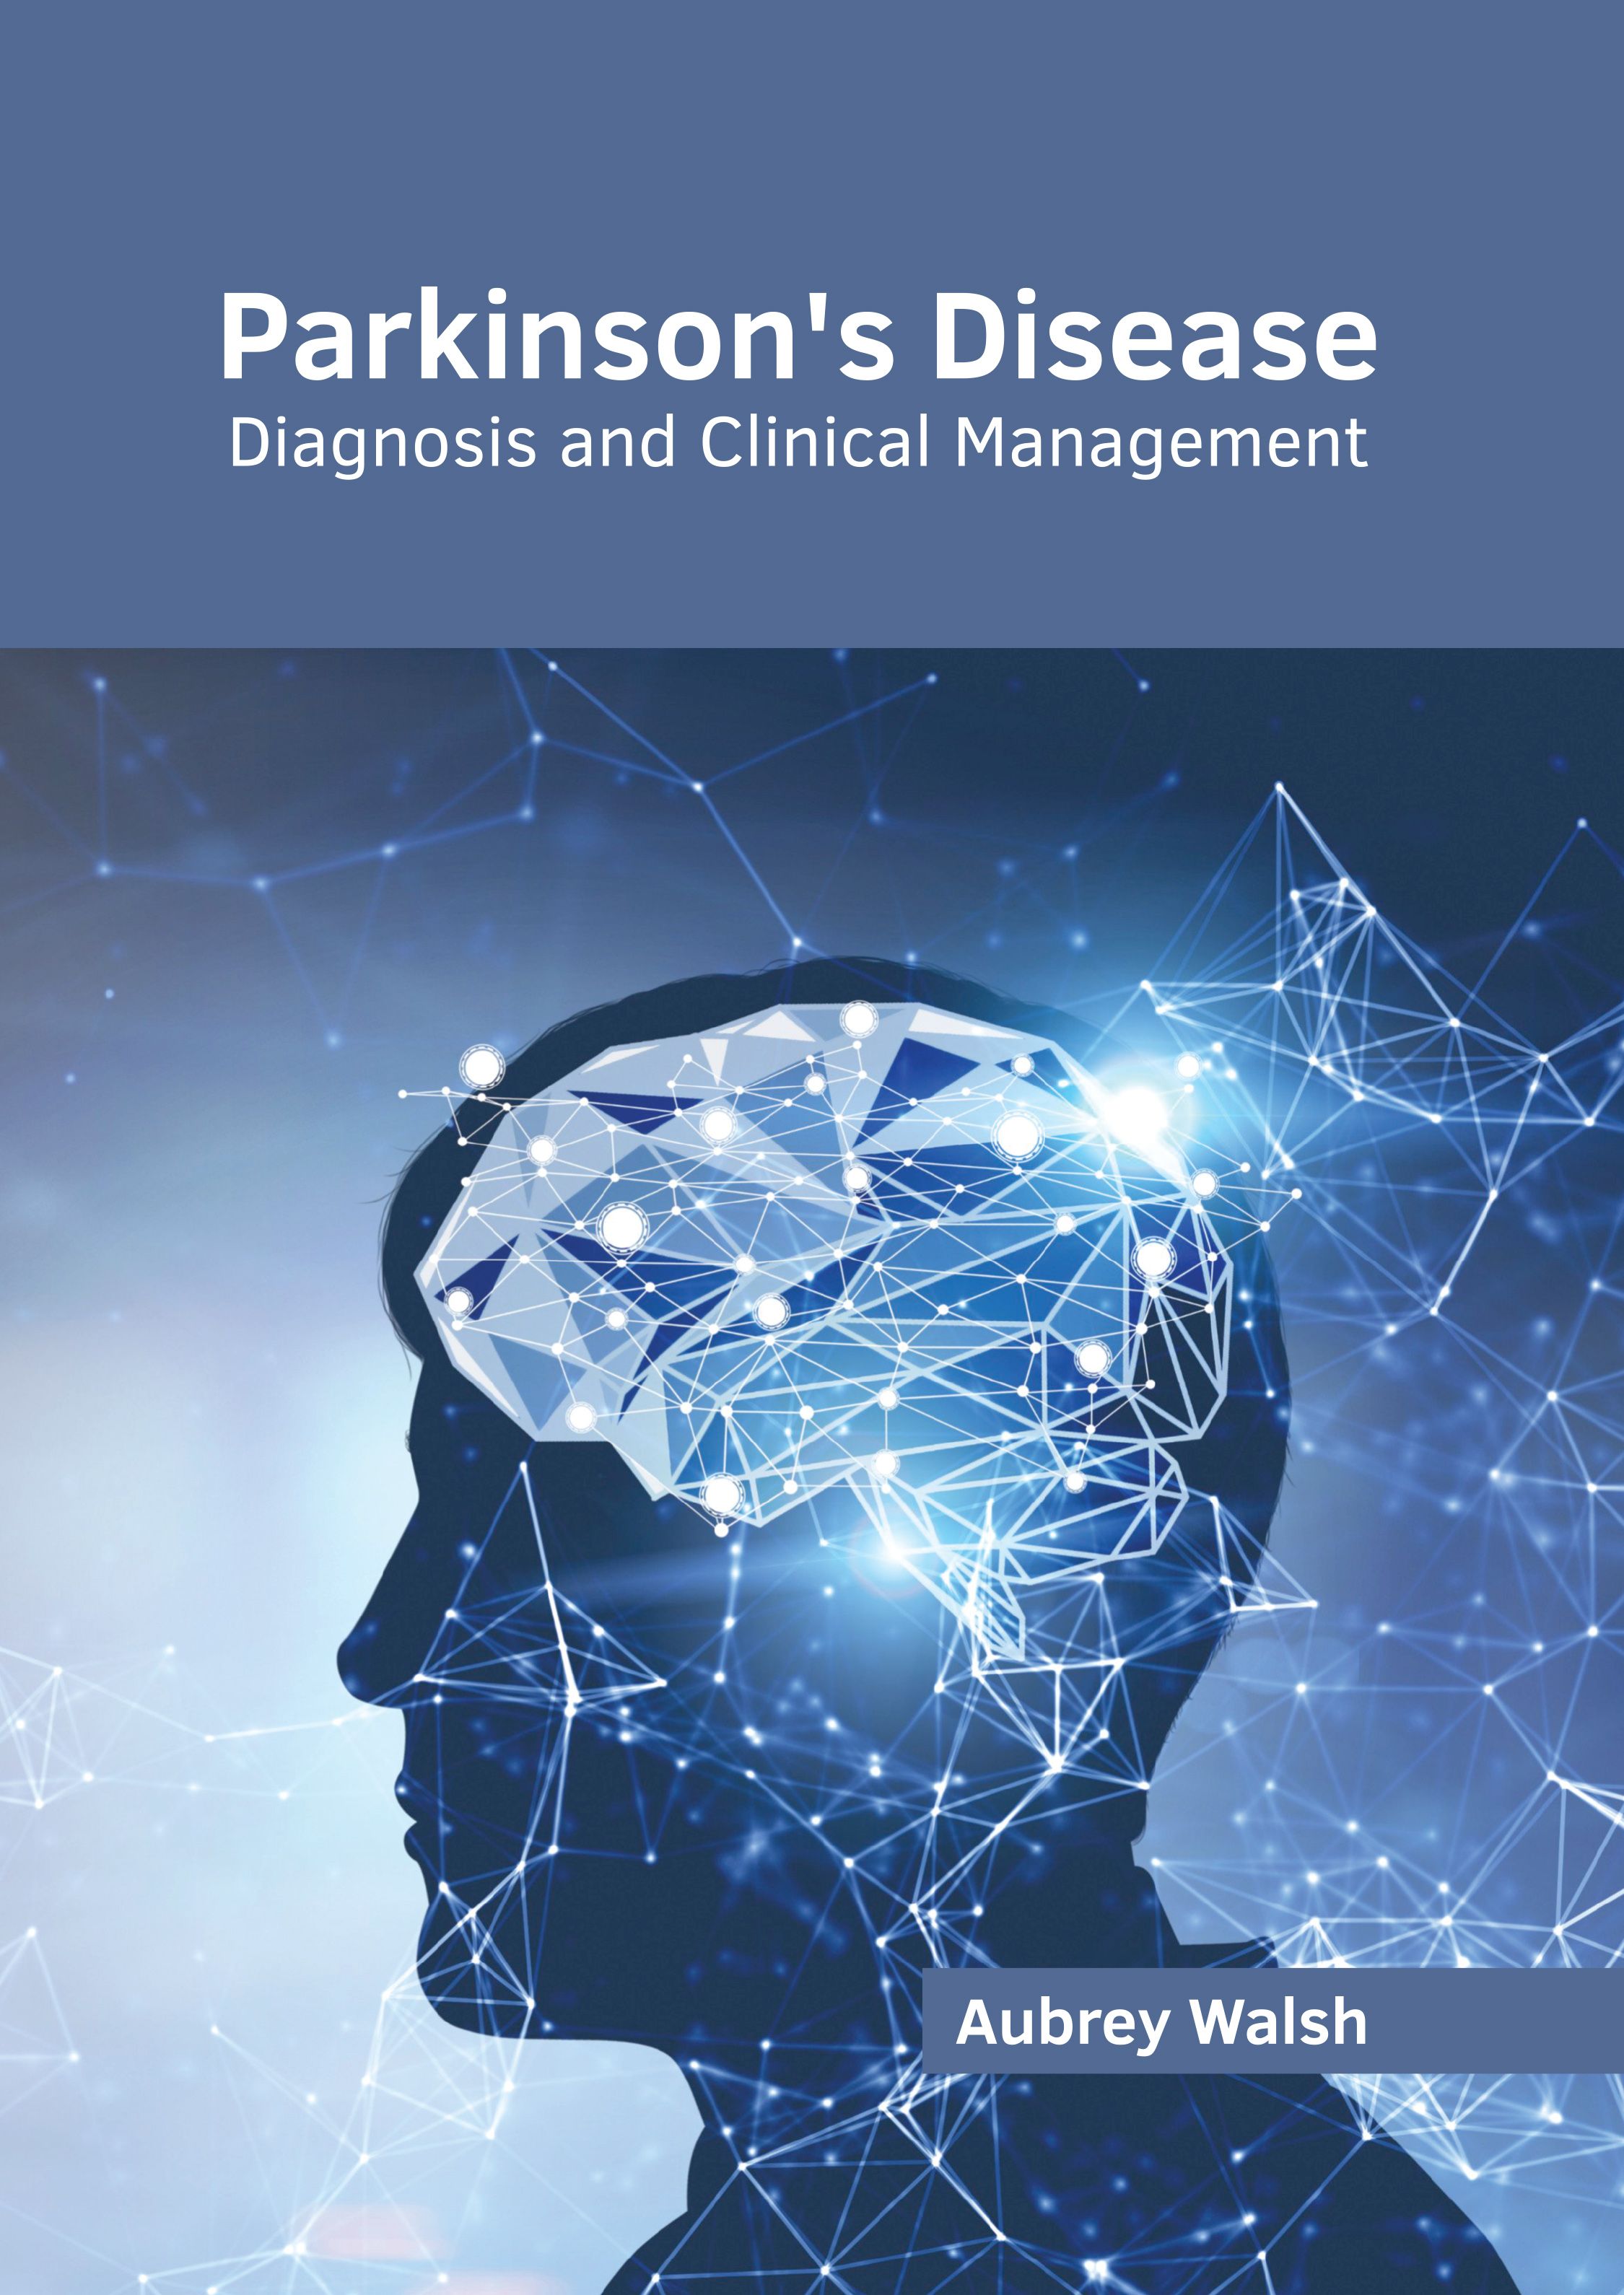 PARKINSON'S DISEASE: DIAGNOSIS AND CLINICAL MANAGEMENT